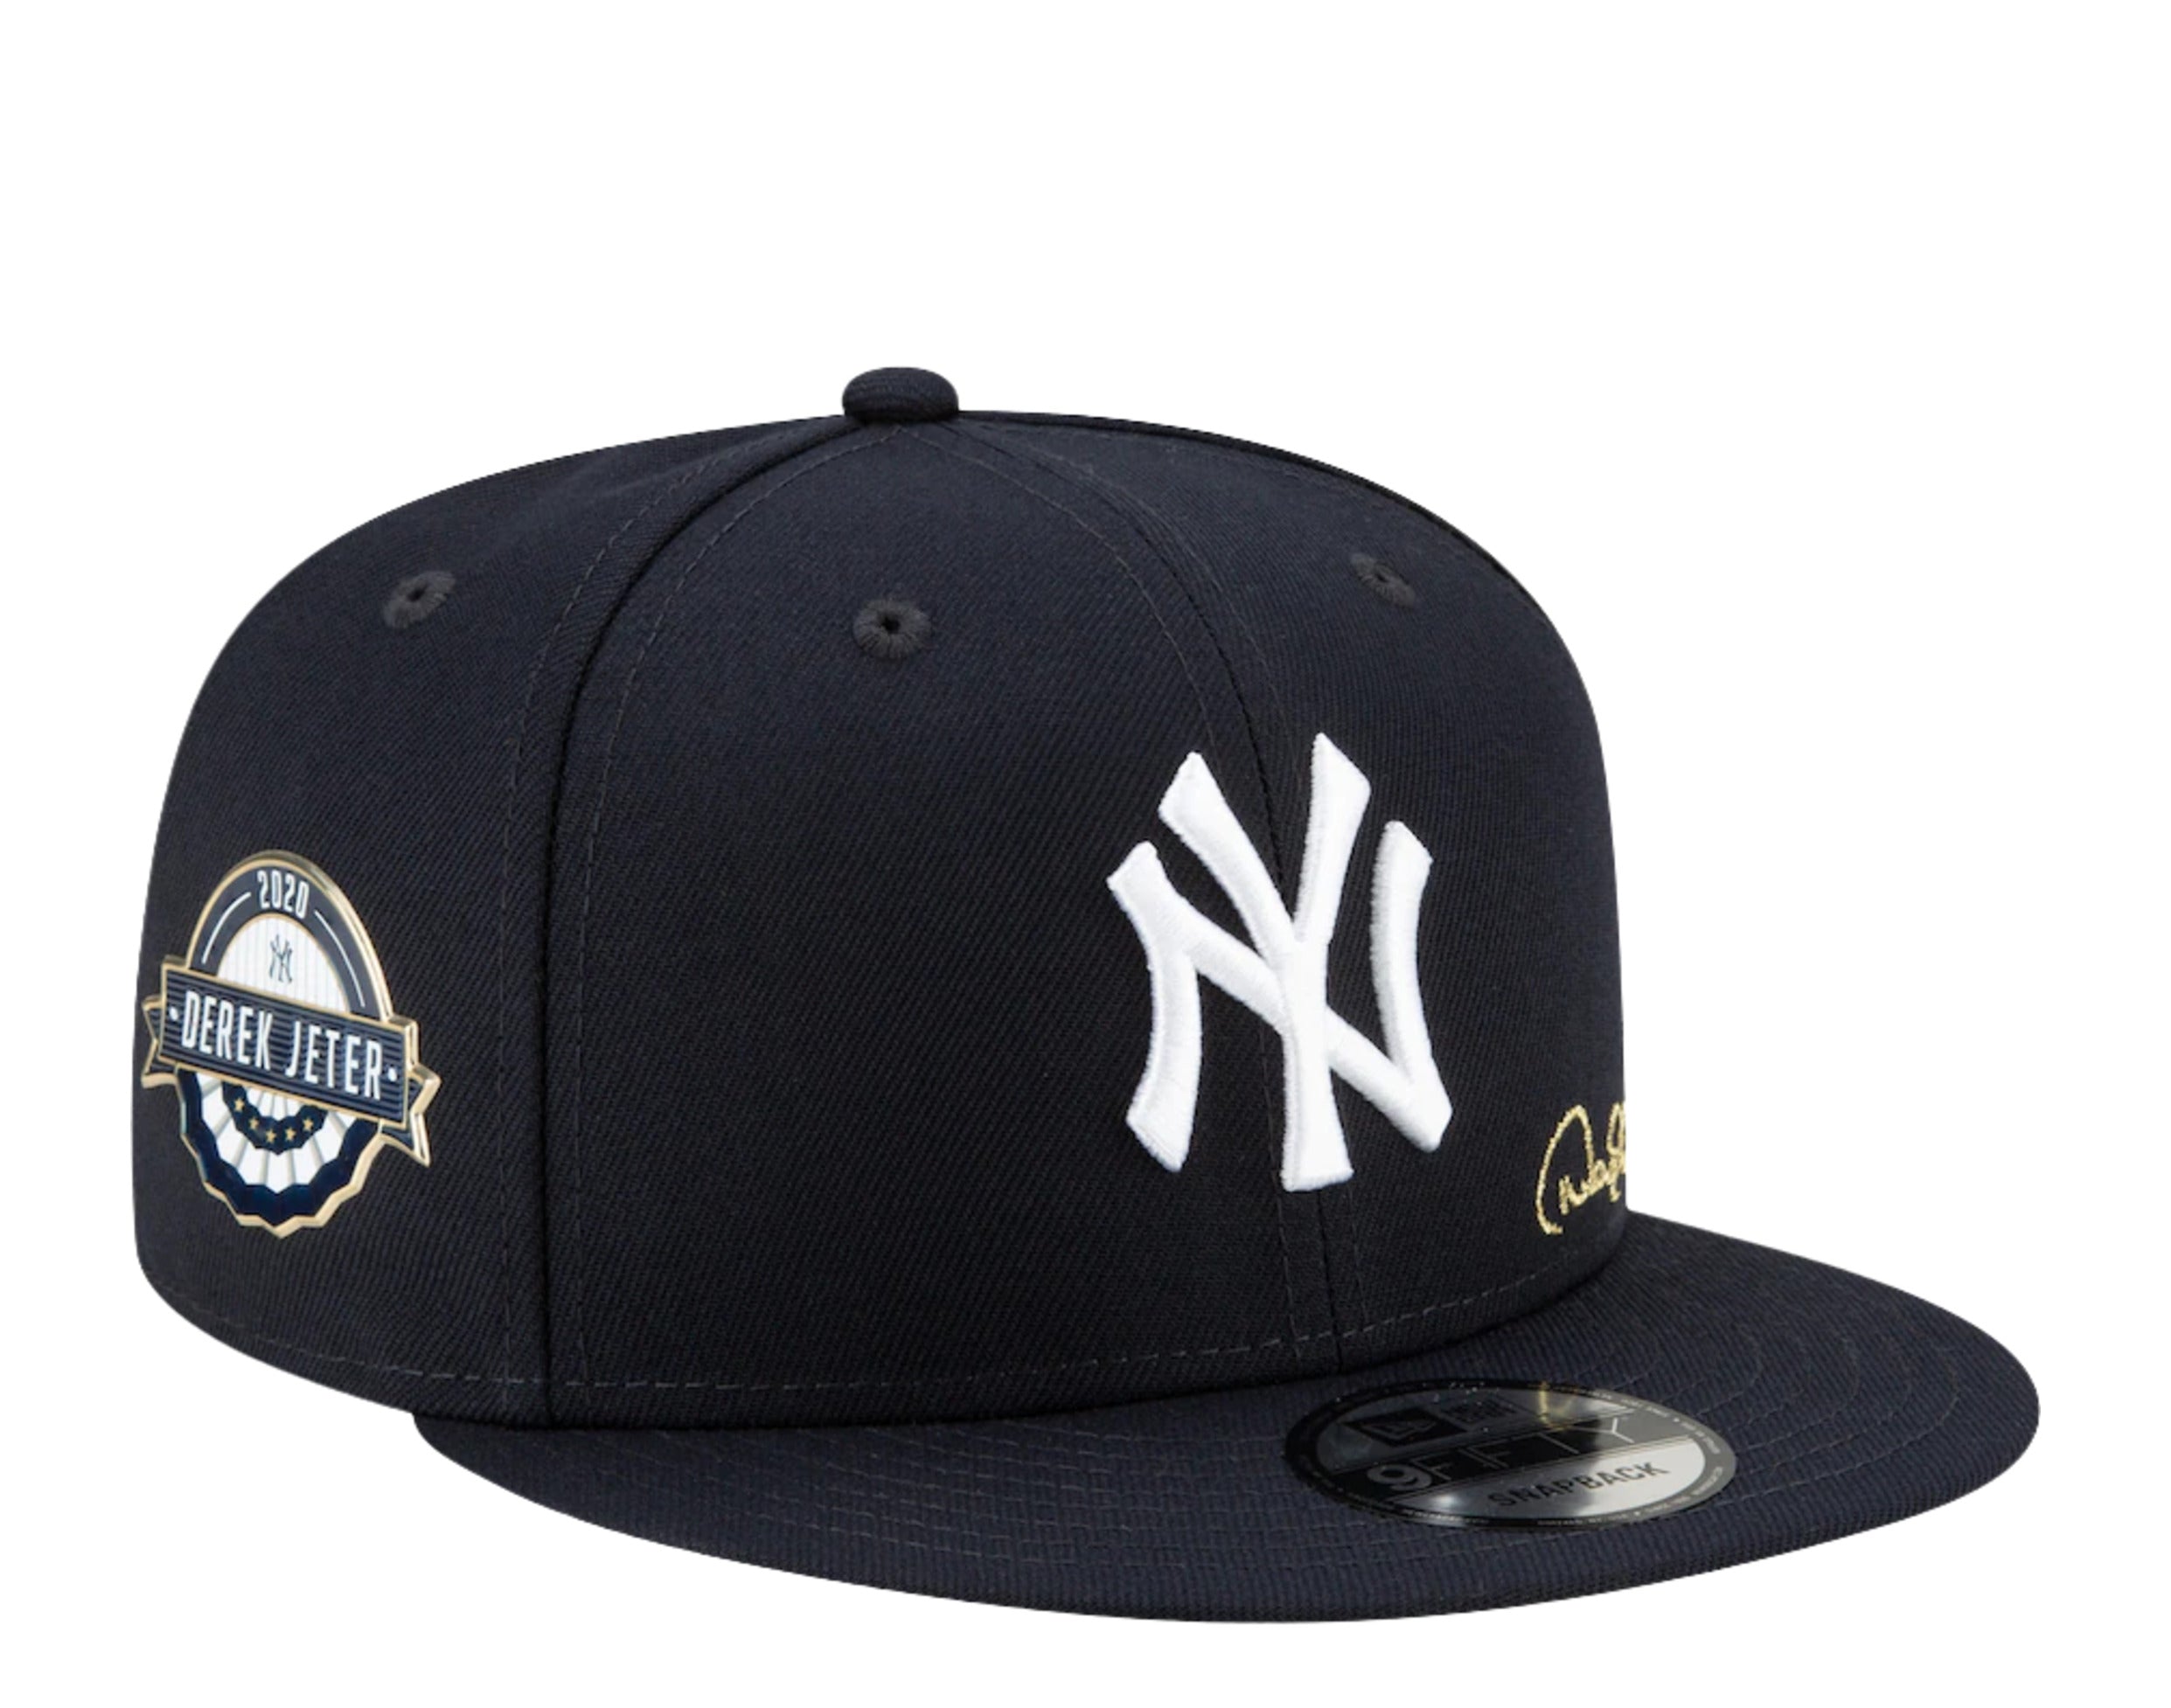 Derek Jeter New York Yankees Nike 2020 Hall of Fame Induction